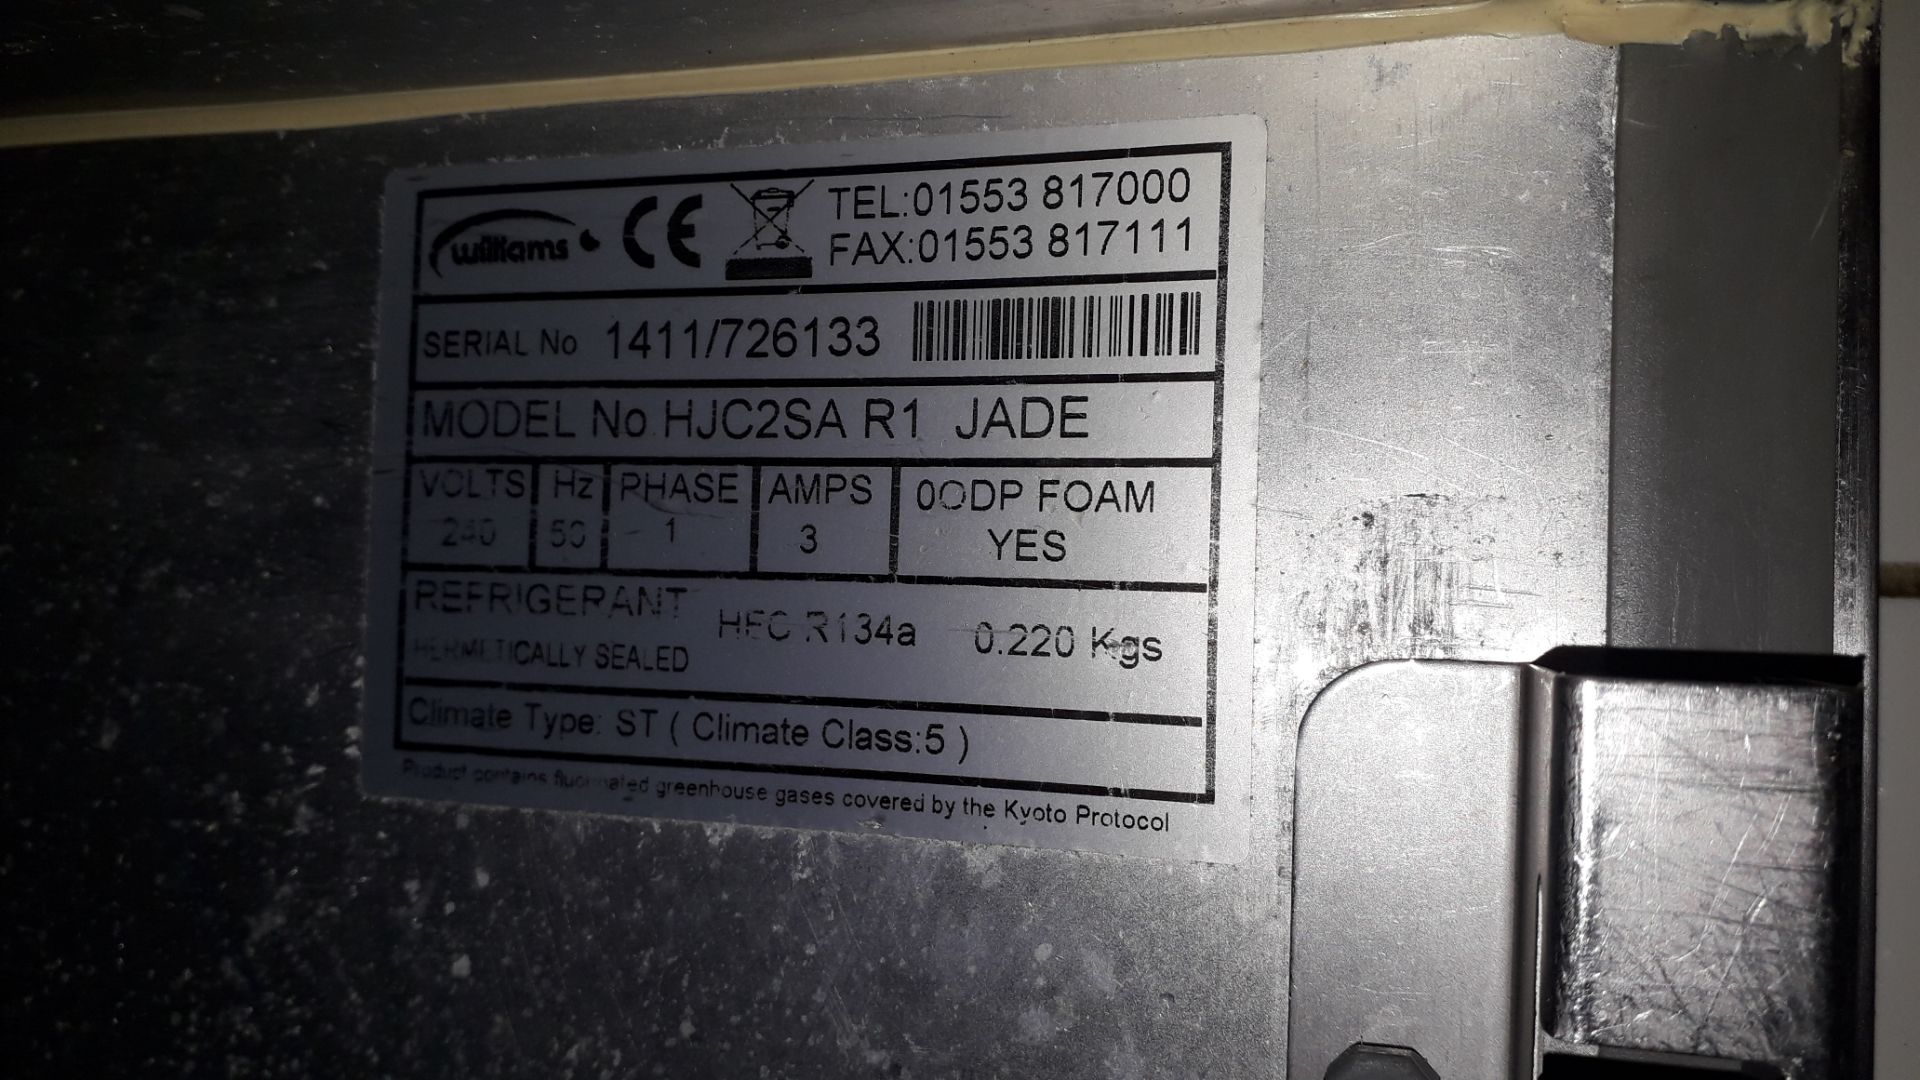 Williams HJC2SAR1JADE Stainless Steel 2 Door Undercounter Refrigerator Serial Number 1411-726133 - Image 3 of 3